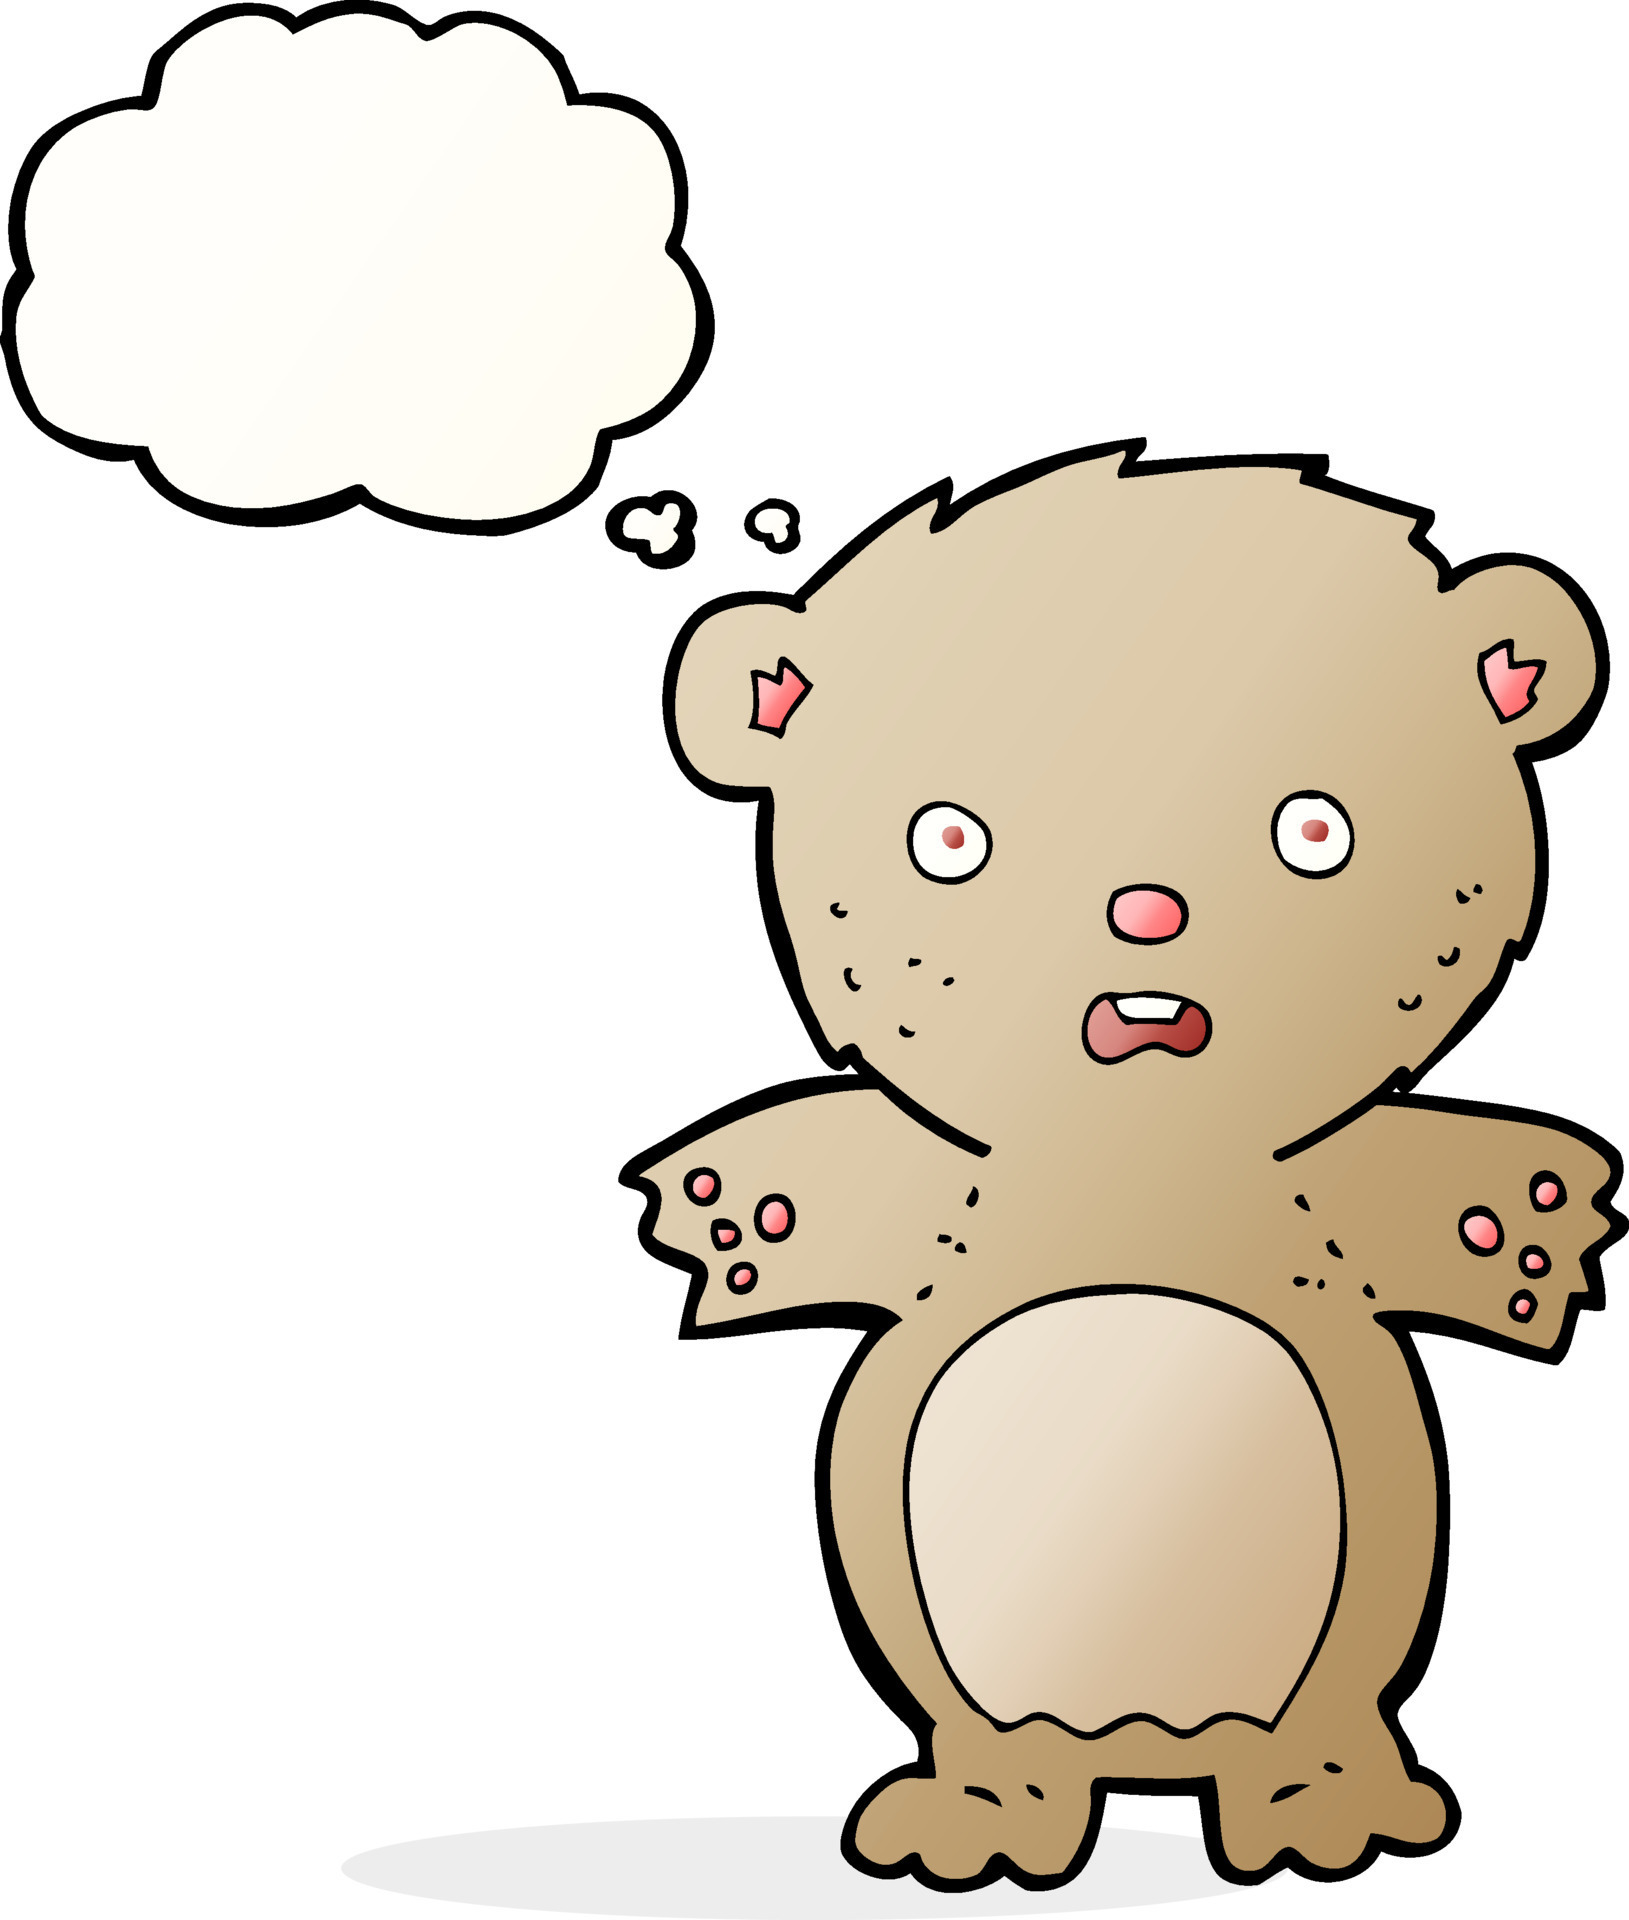 dibujos animados de oso de peluche asustado con burbuja de pensamiento  12345057 Vector en Vecteezy